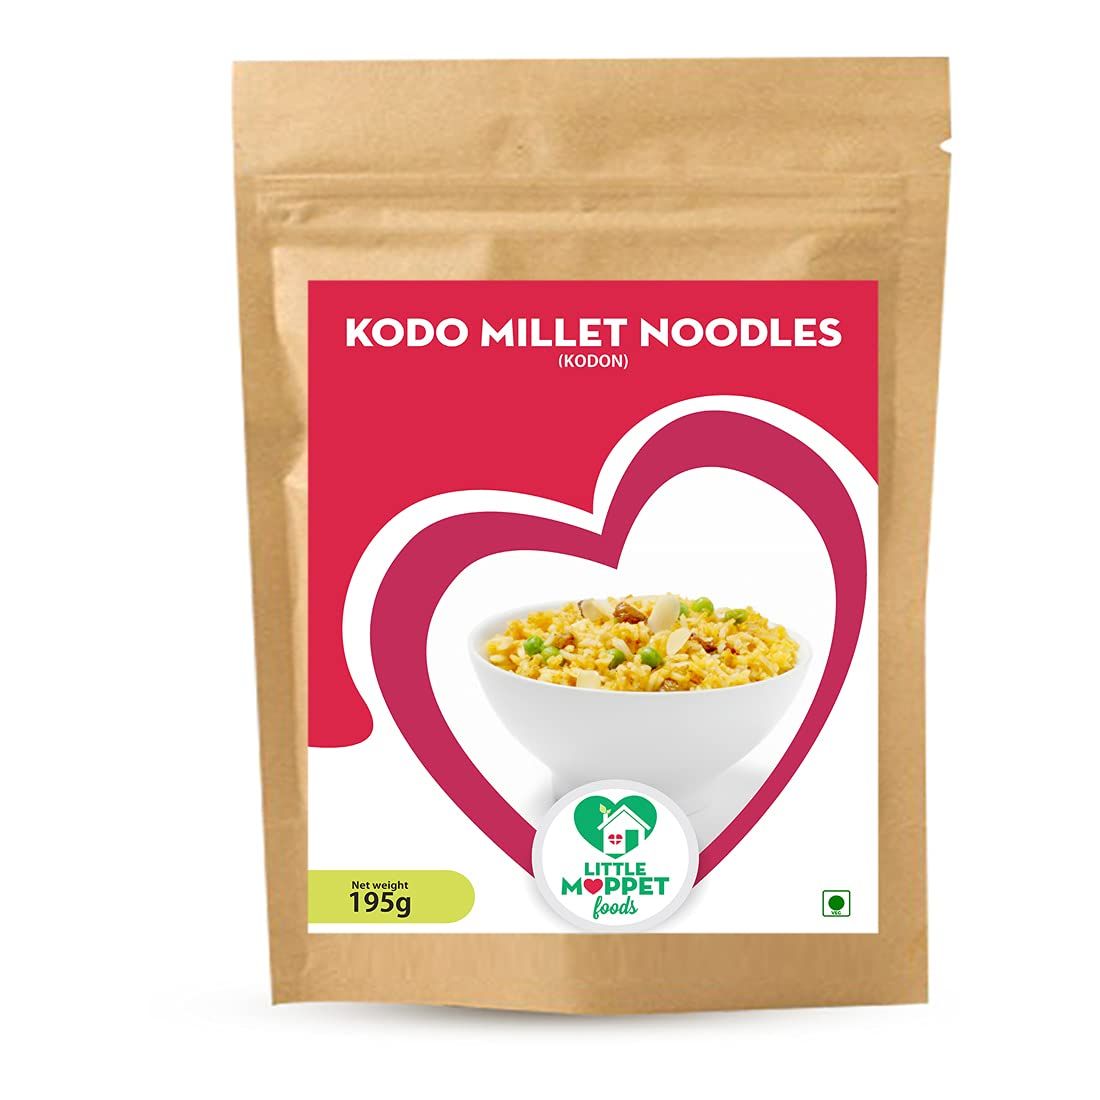 Little Moppet Kodo Millet Noodles Image